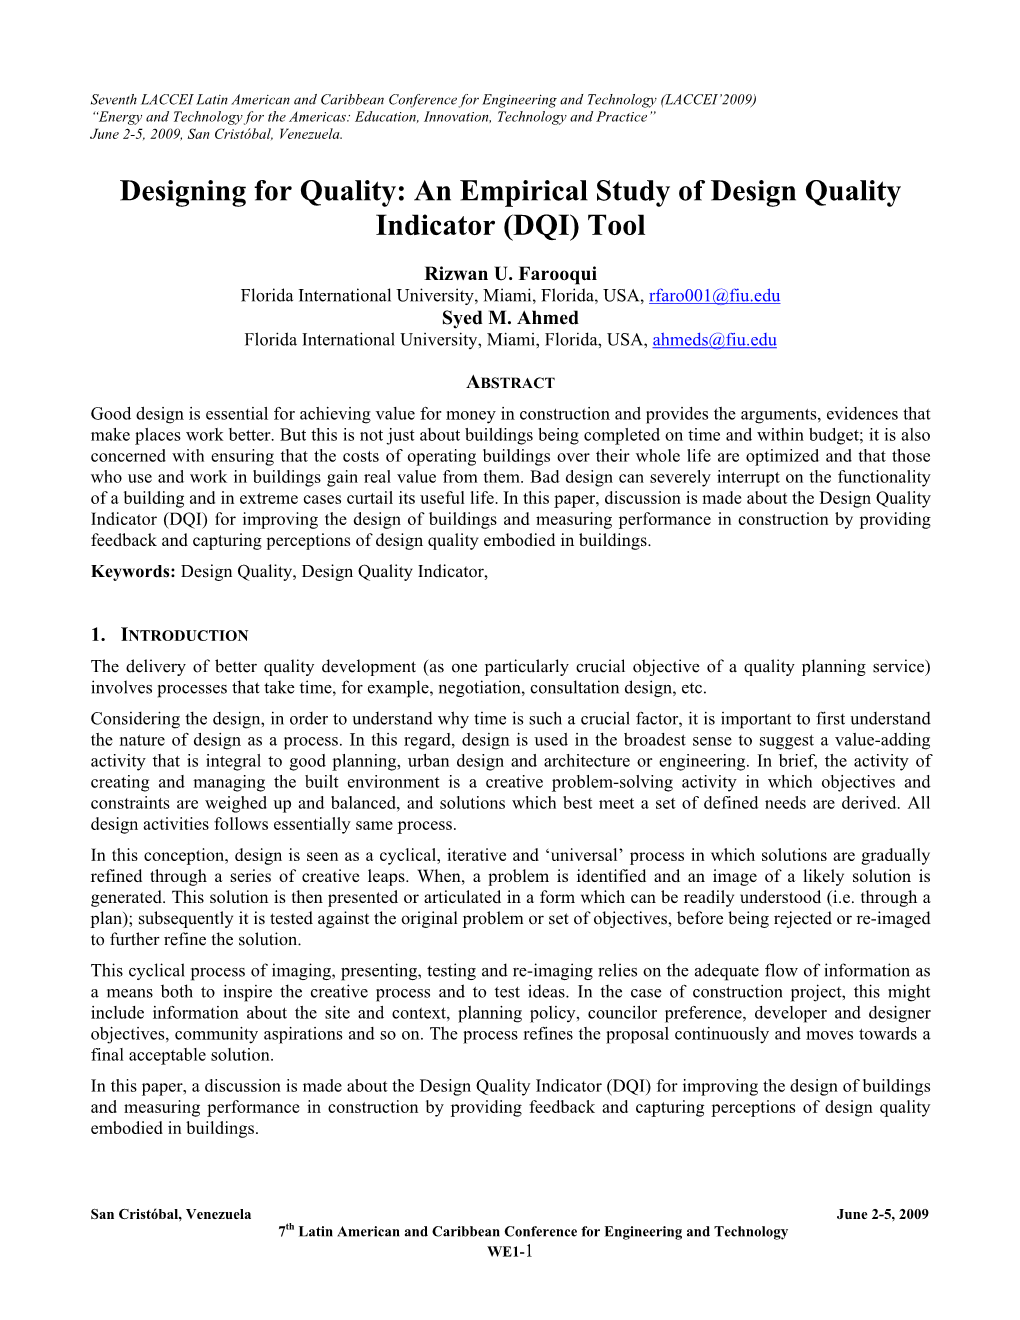 An Empirical Study of Design Quality Indicator (DQI) Tool